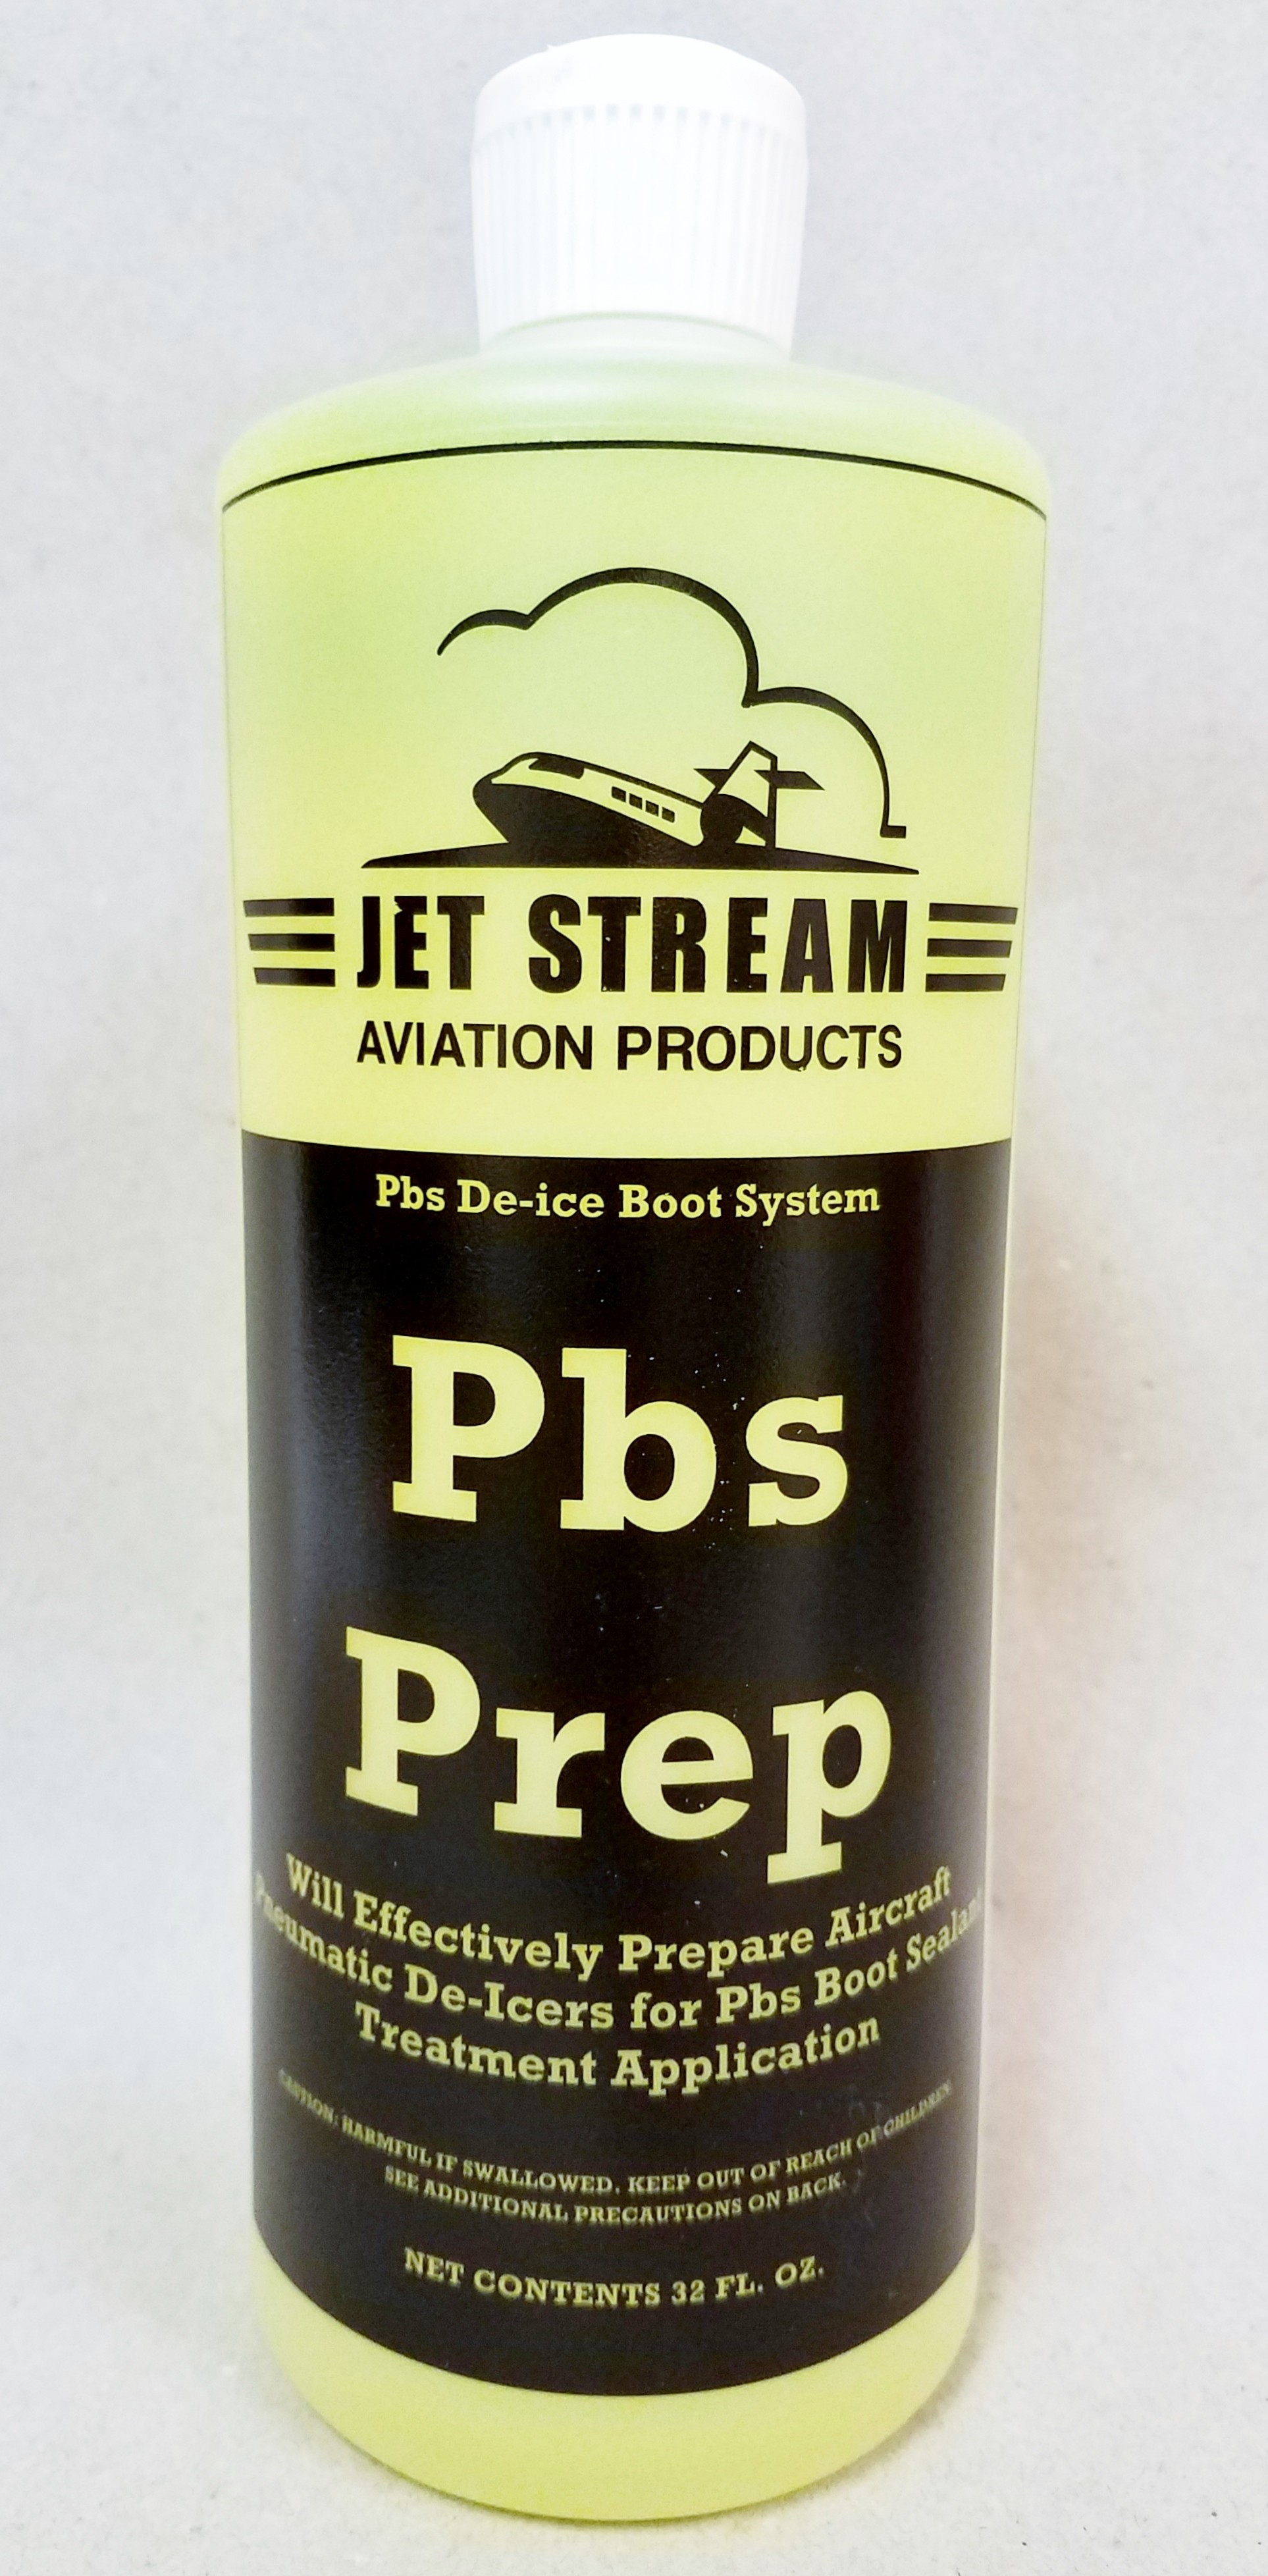 Pbs Prep - PREP06 